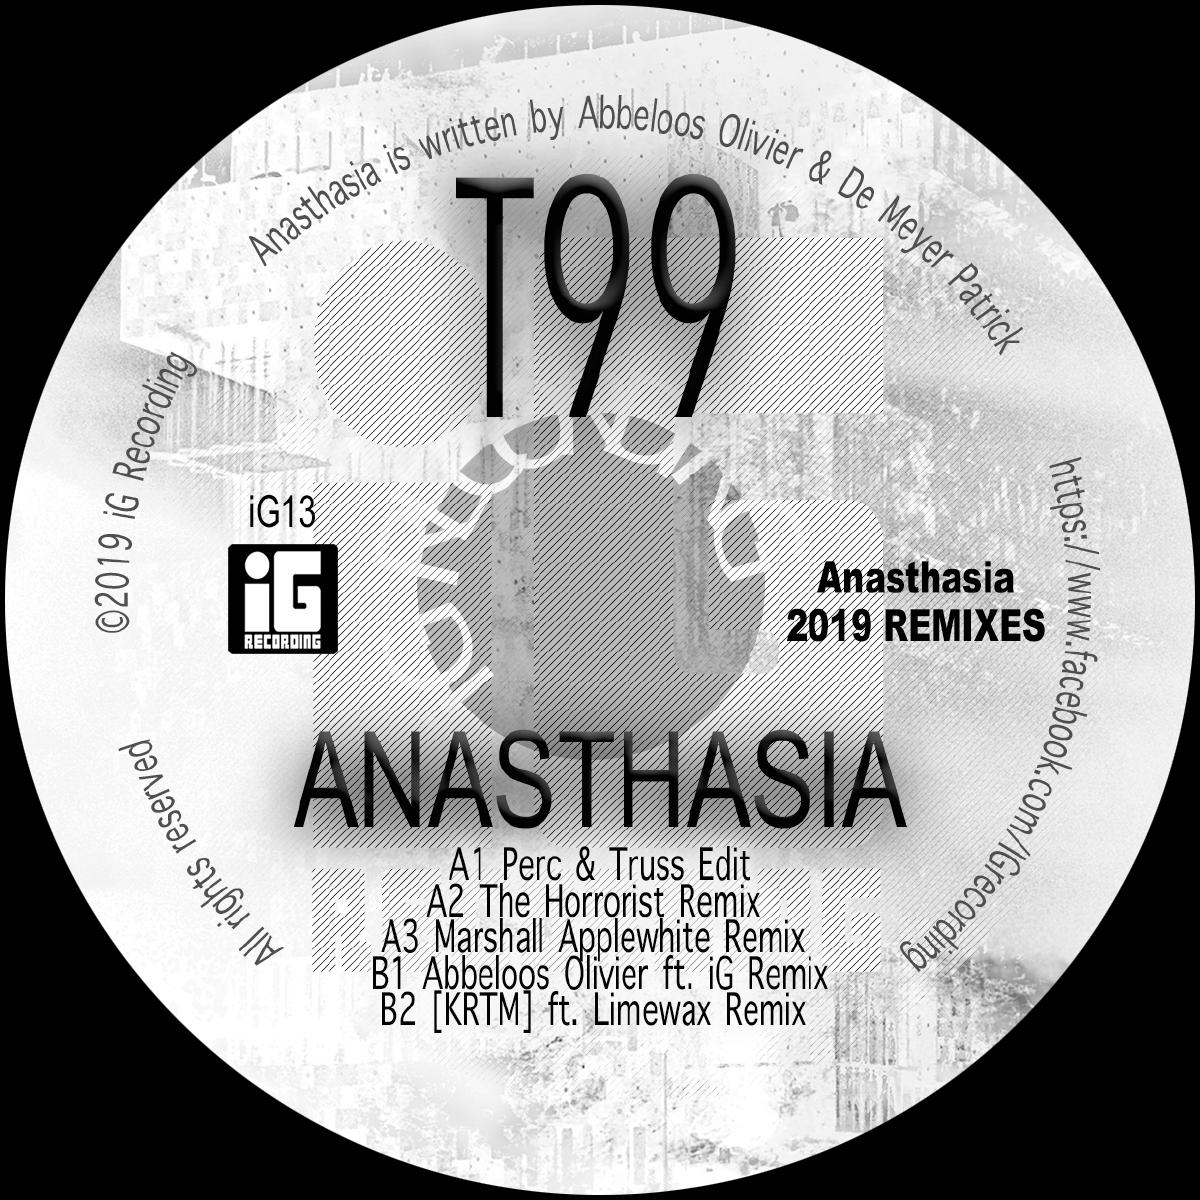 T99/ANASTHASIA (2019 REMIXES) 12"